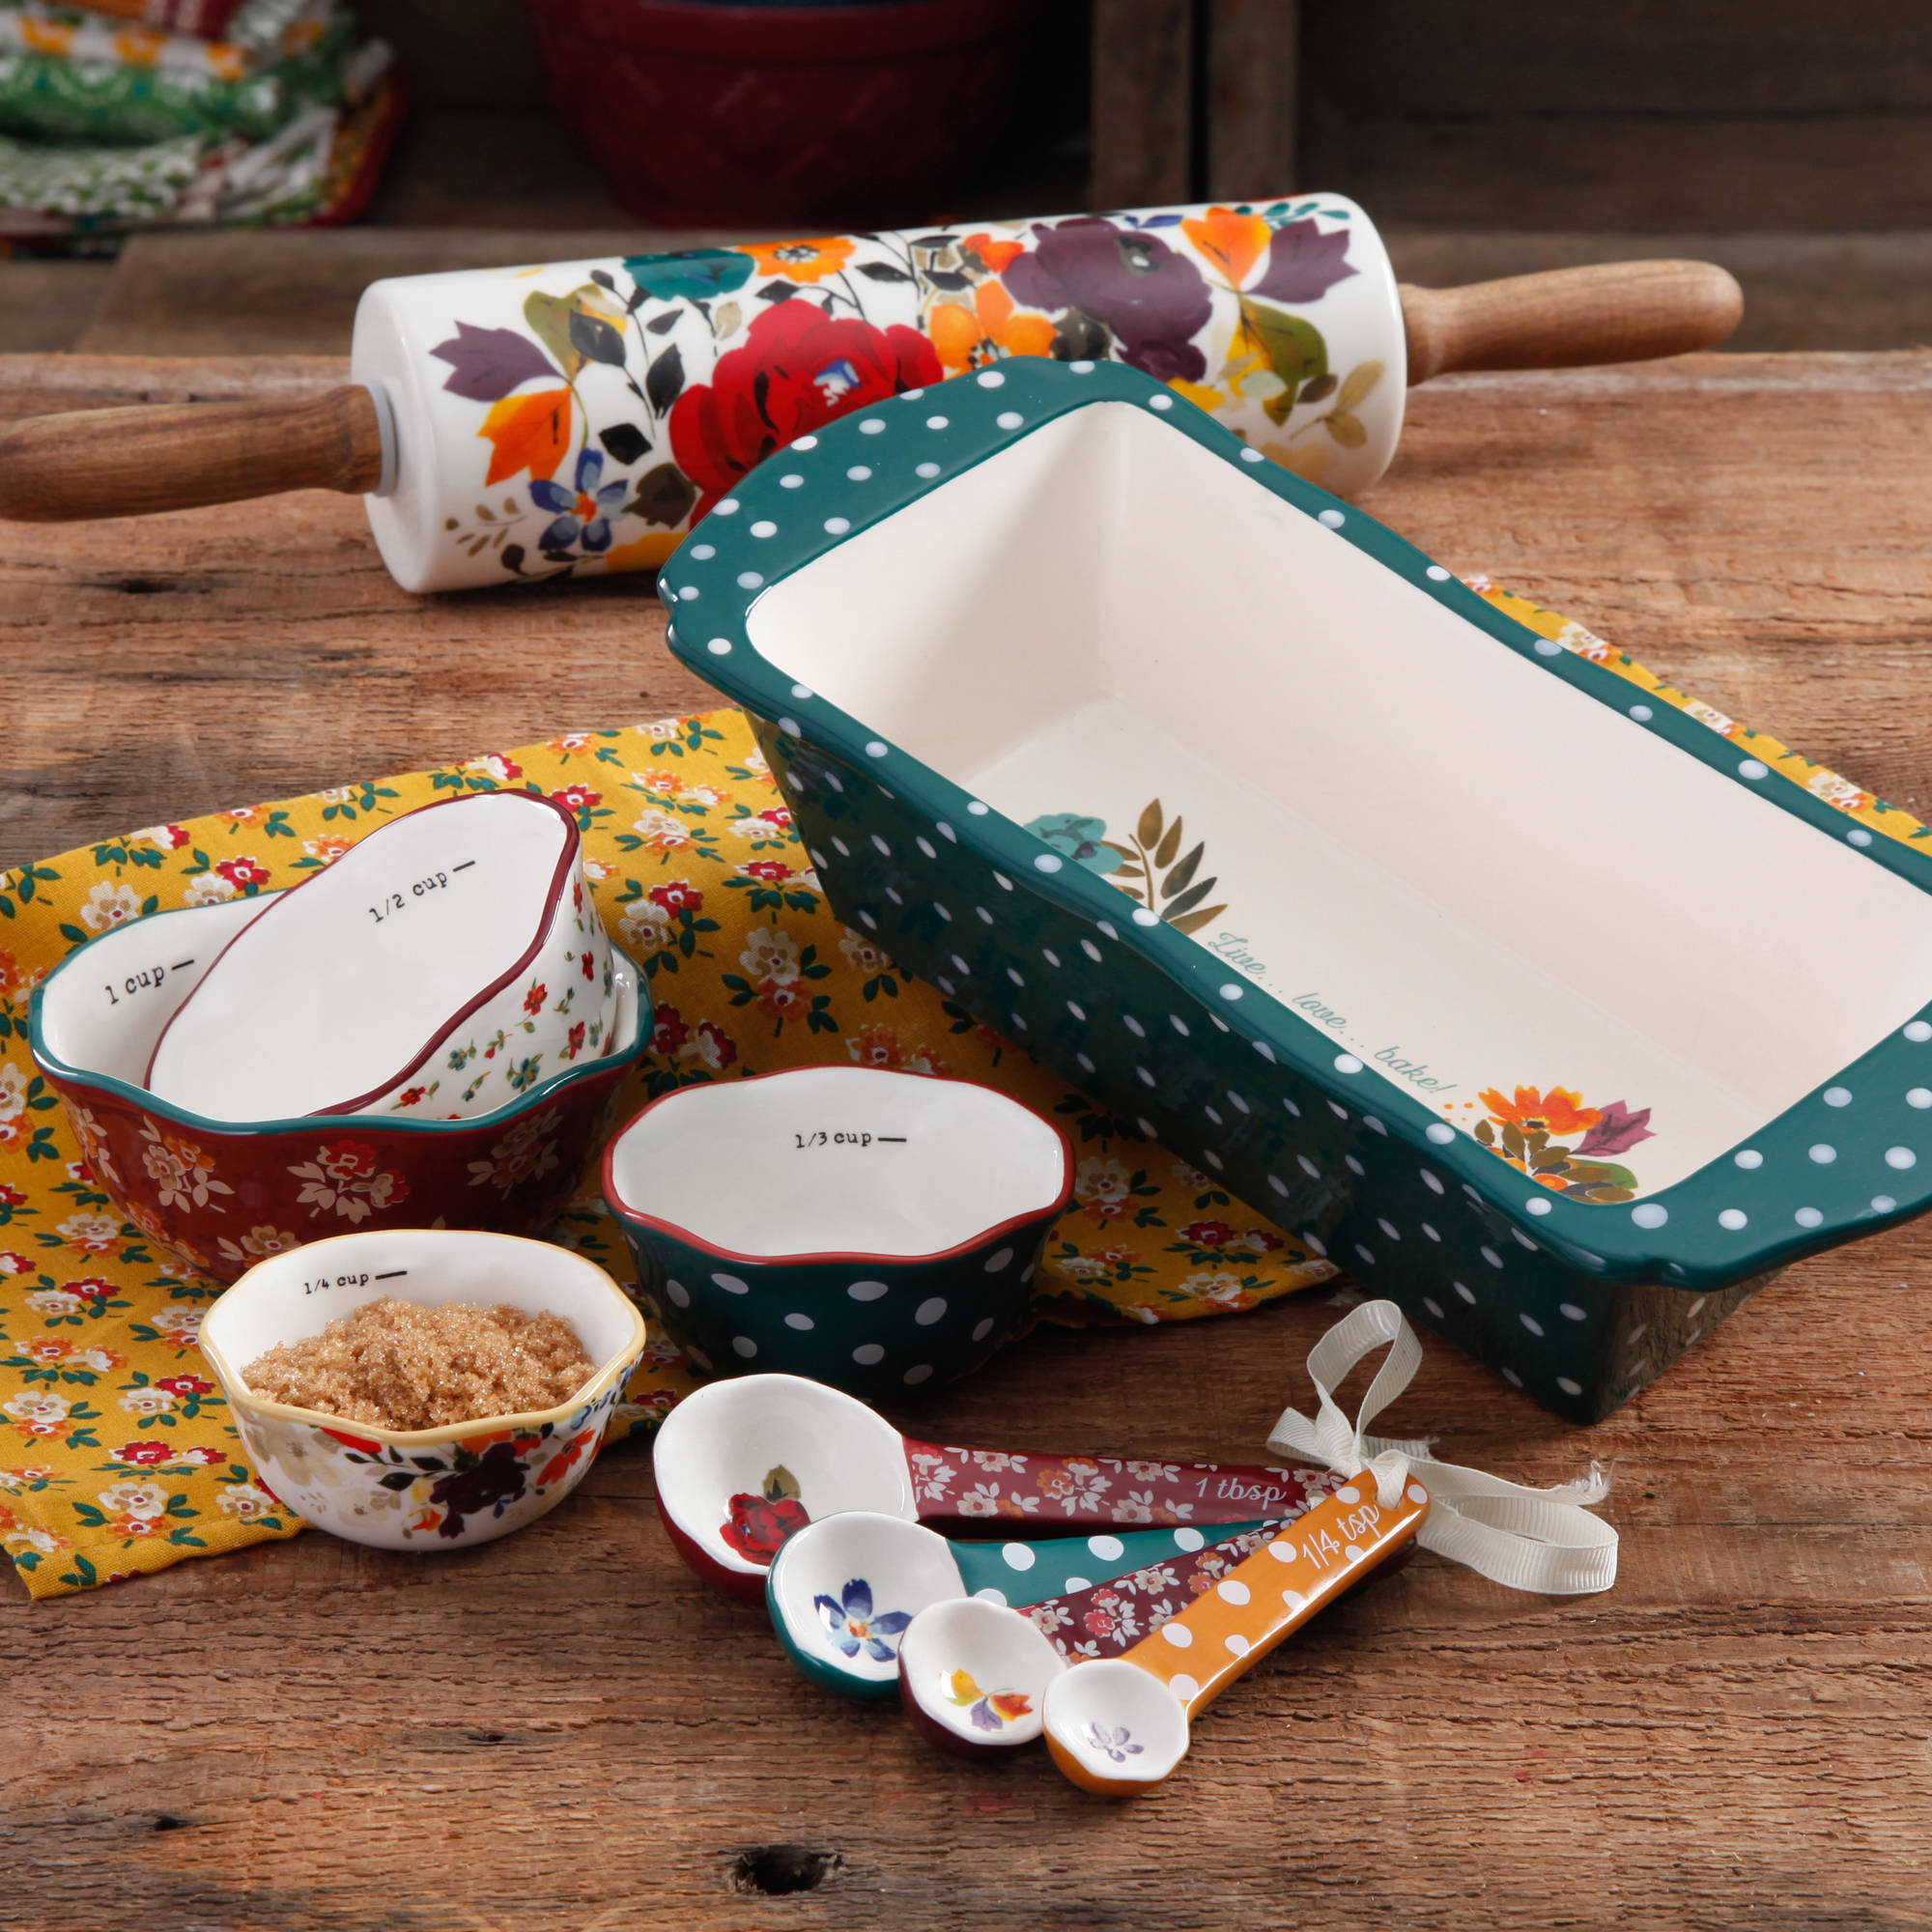 The Pioneer Woman Harvest Ceramic Bakeware Set, 10 Piece - image 1 of 6